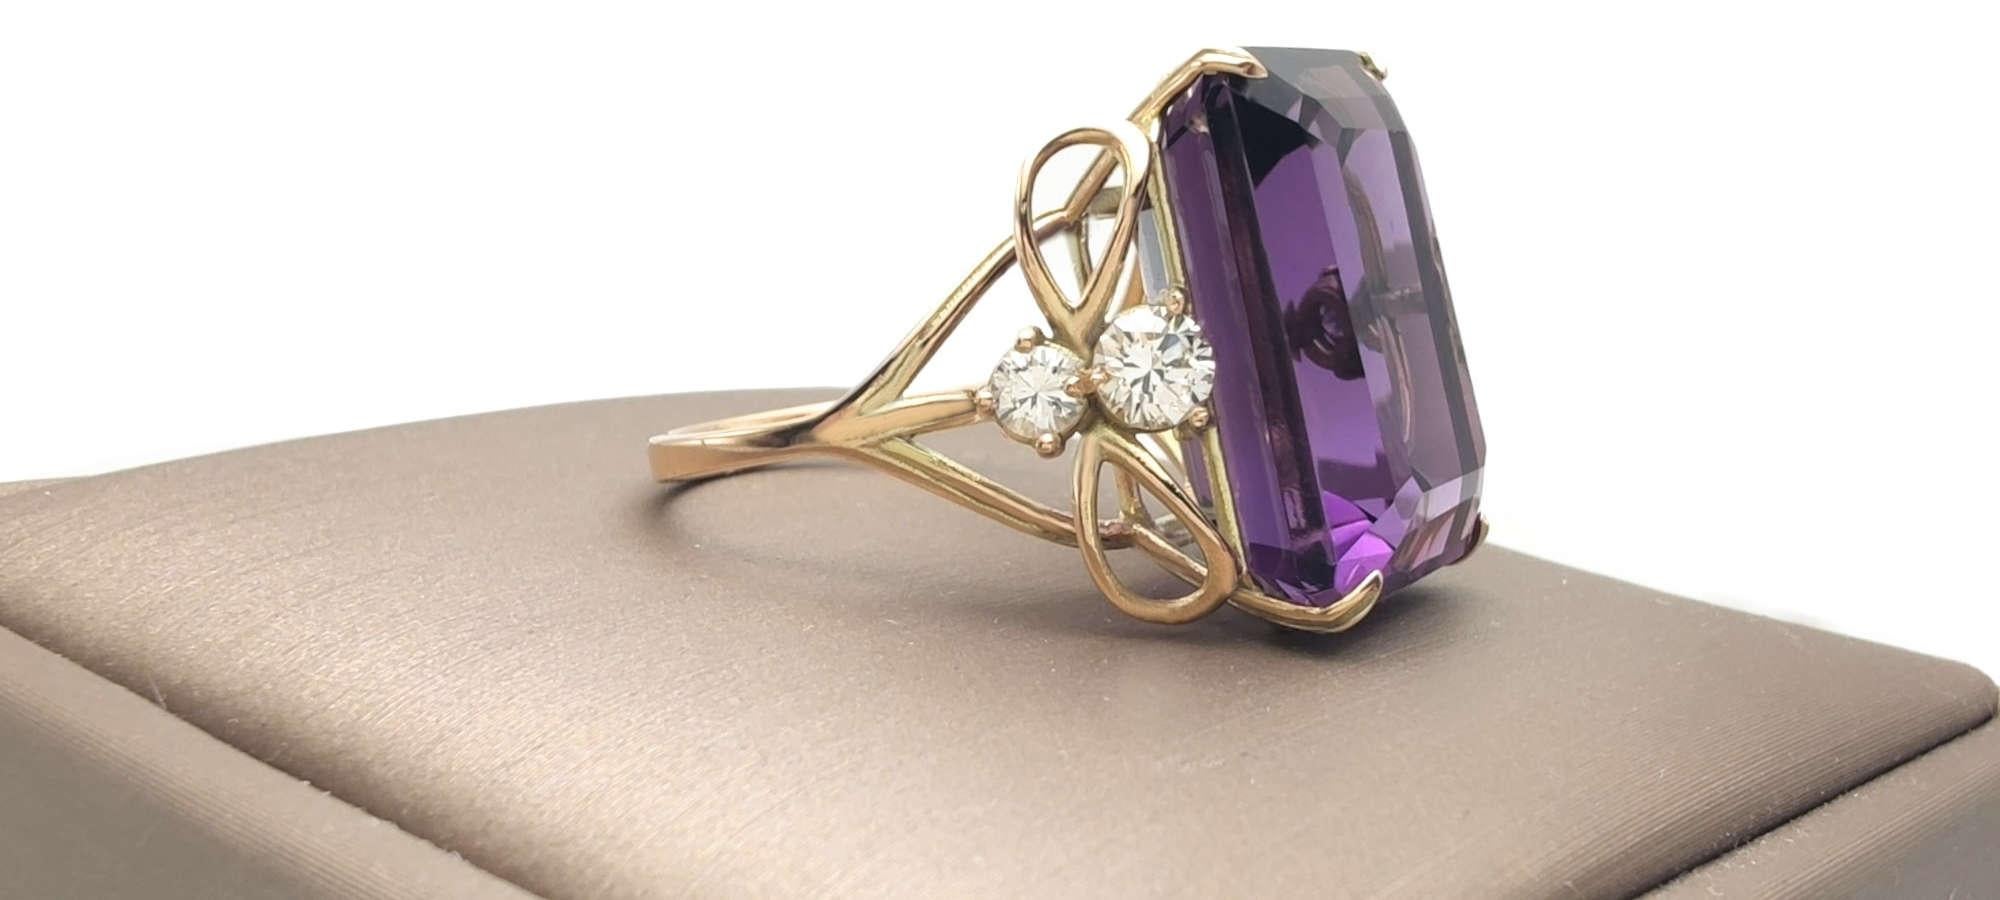 Ring 14K Gold  Certified Amethyst Diamond Cocktail Ring Gemstone Ring Promise  3